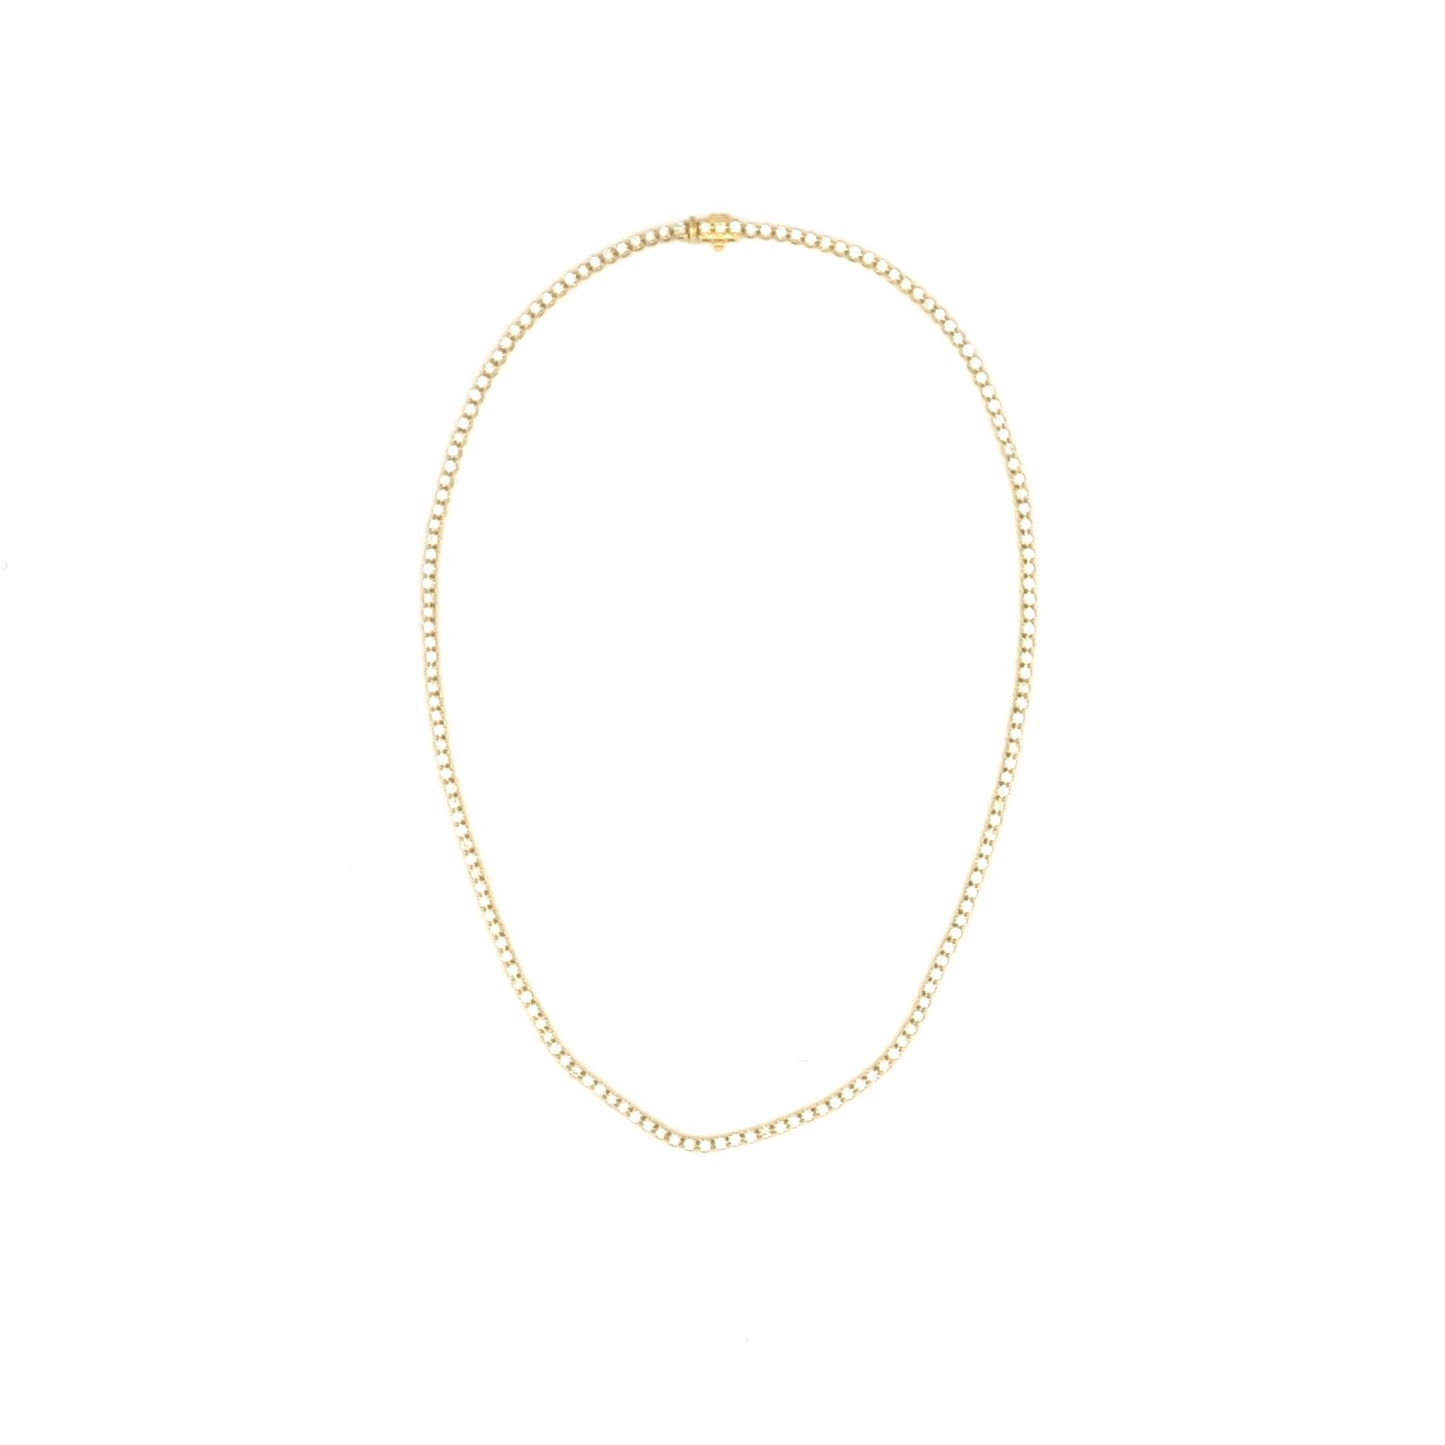 Stern International | 14K Yellow Gold Tennis Necklace - 4.85ct